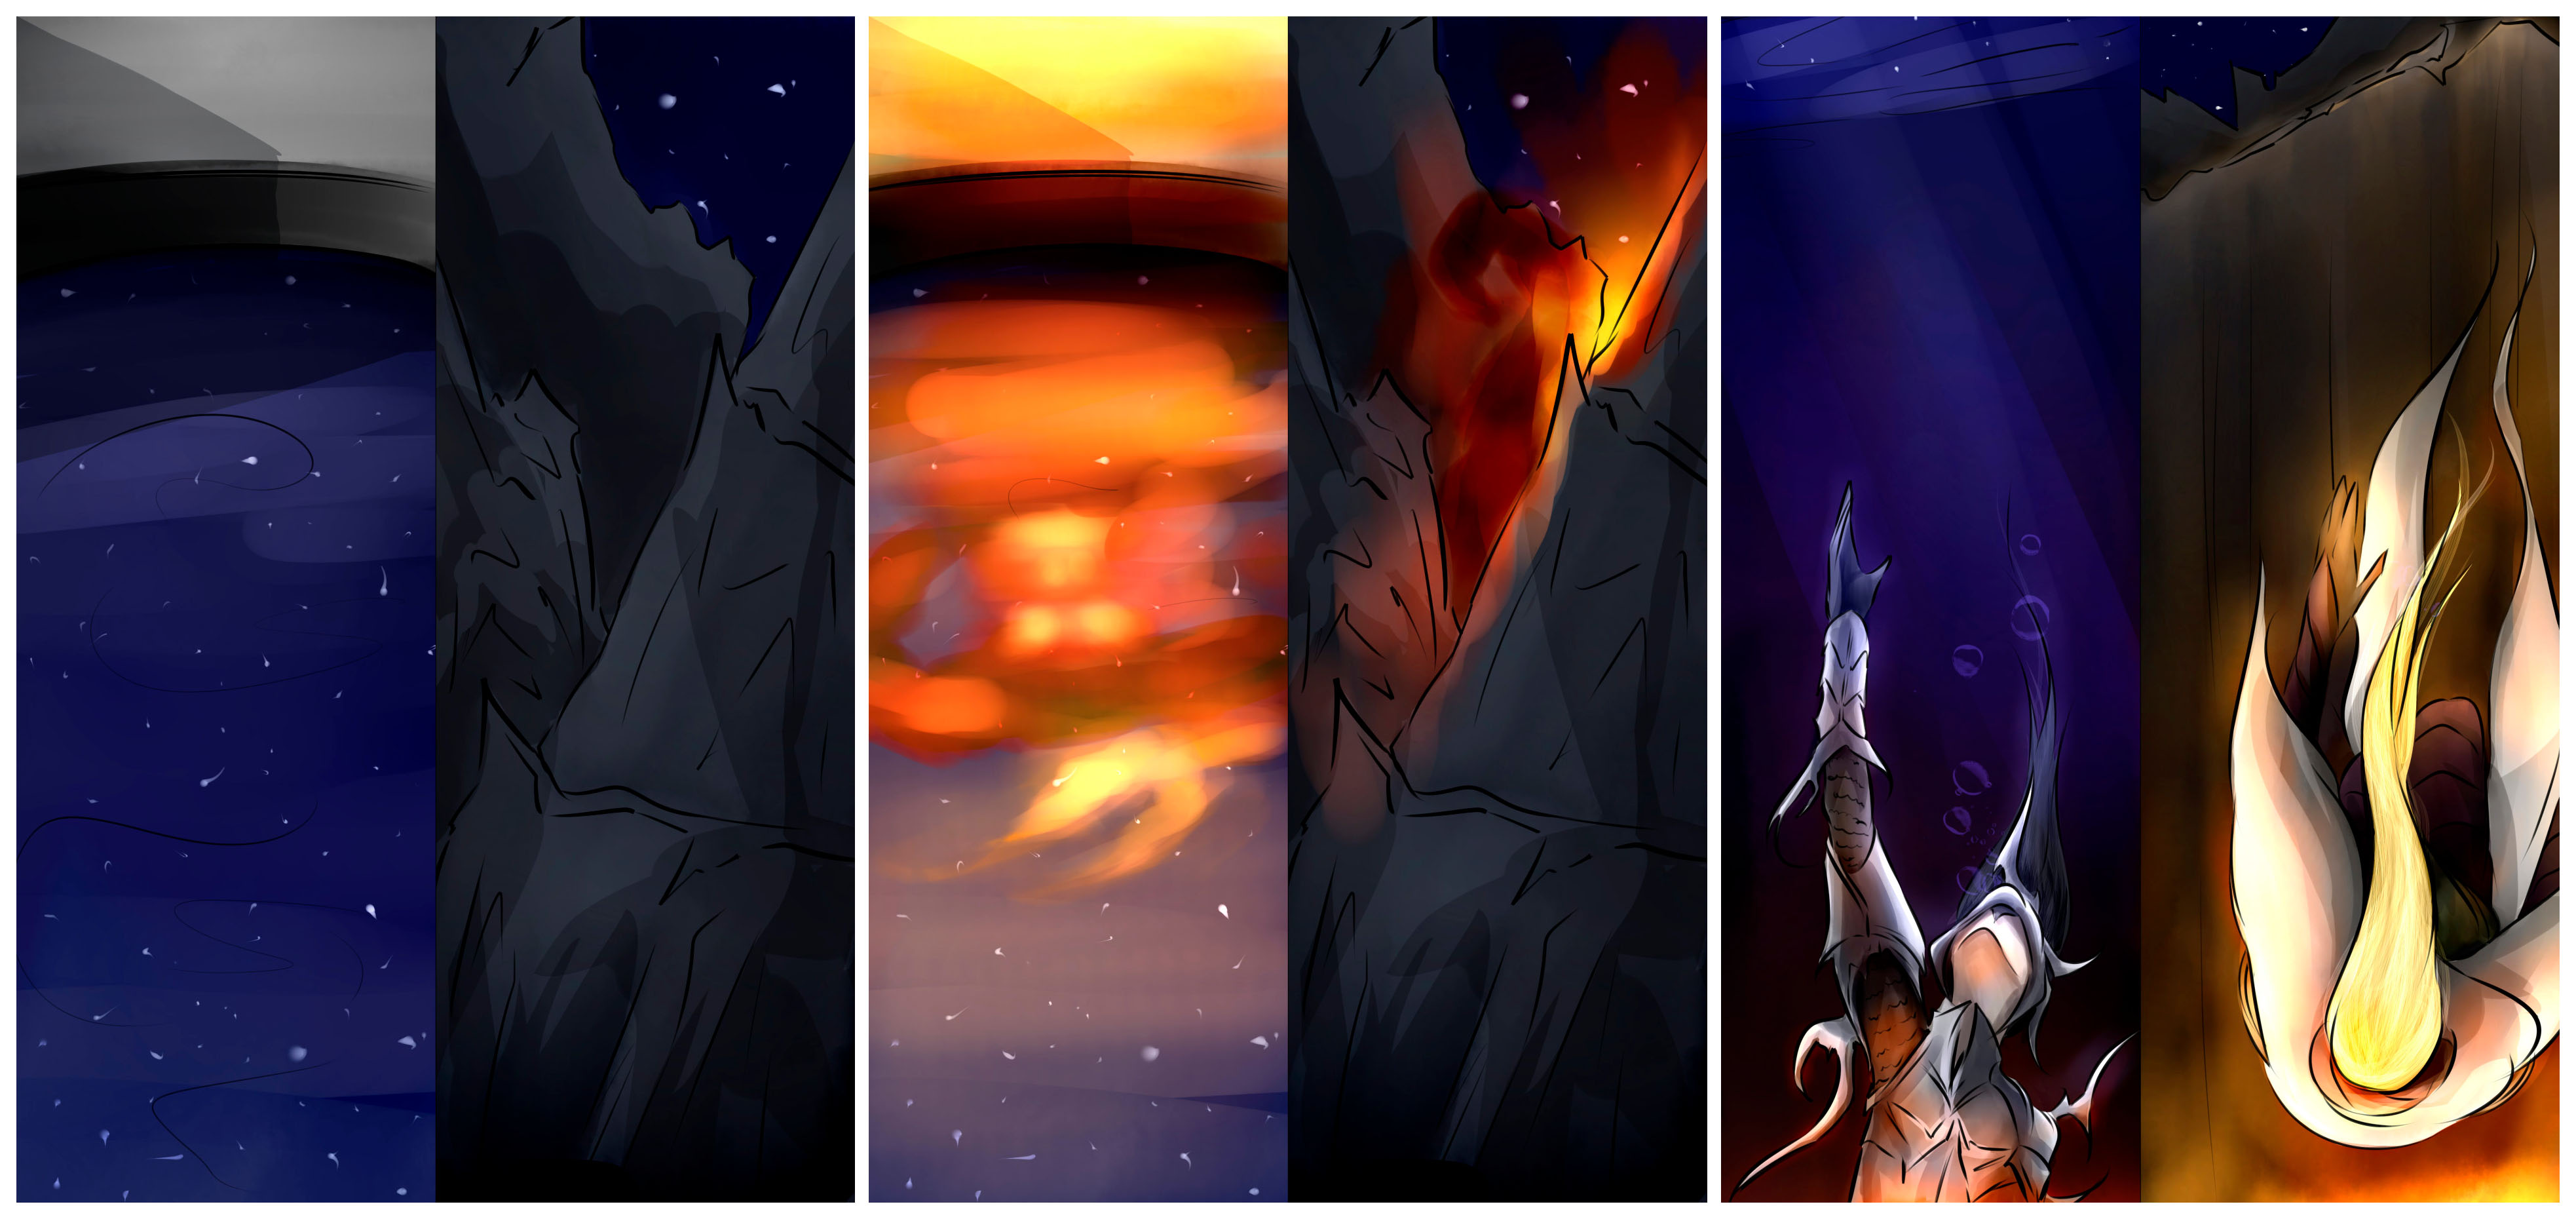 "The Fall of Gondolin" triptych by Hirazuki